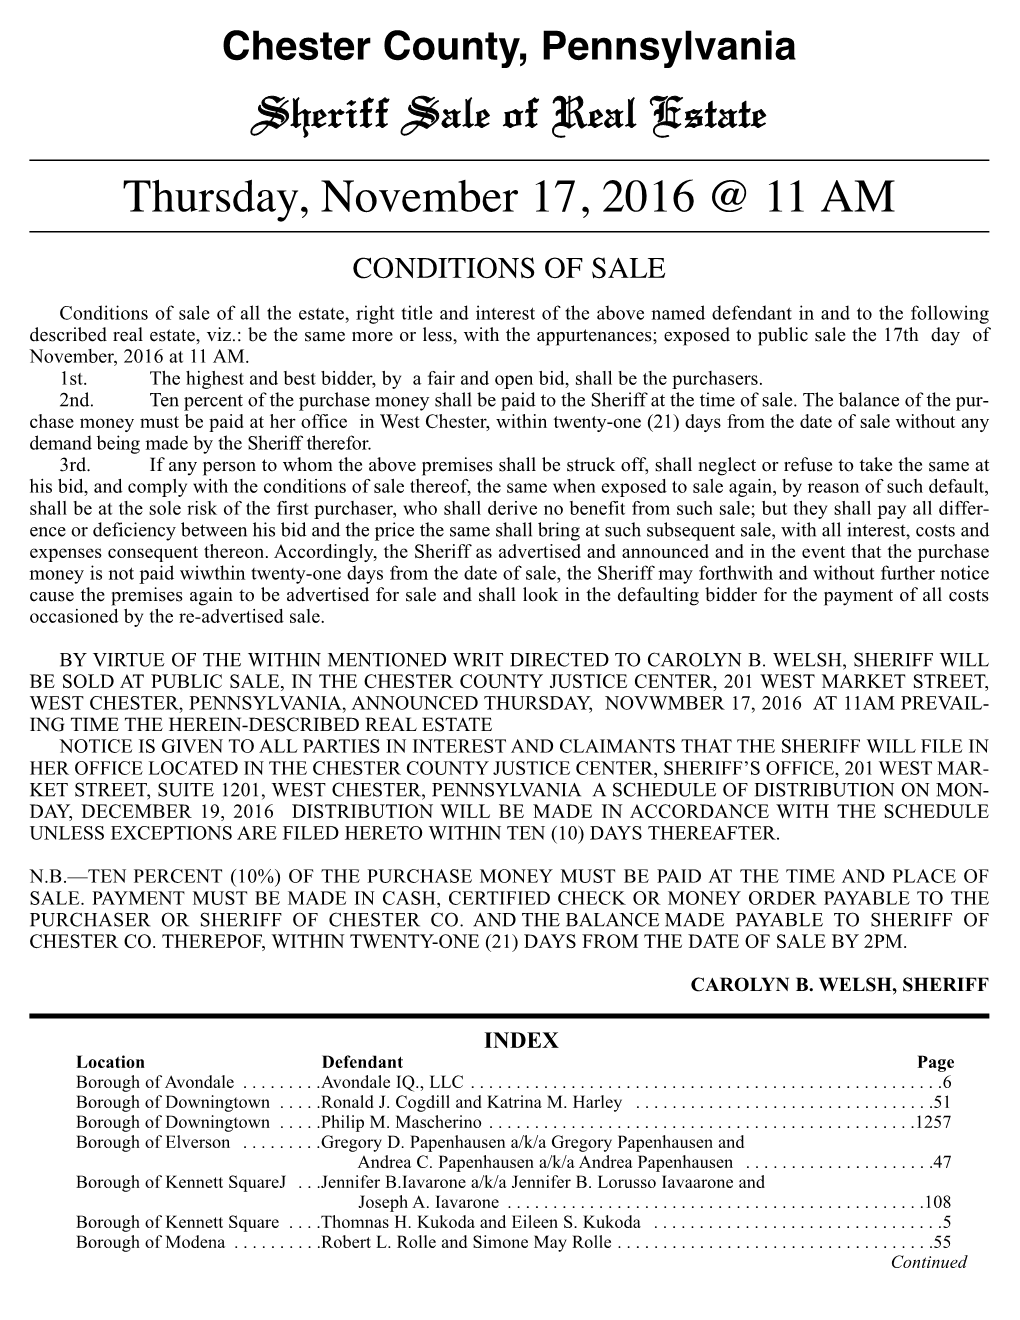 Sheriff Sale of Real Estate Thursday, November 17, 2016 @ 11 AM